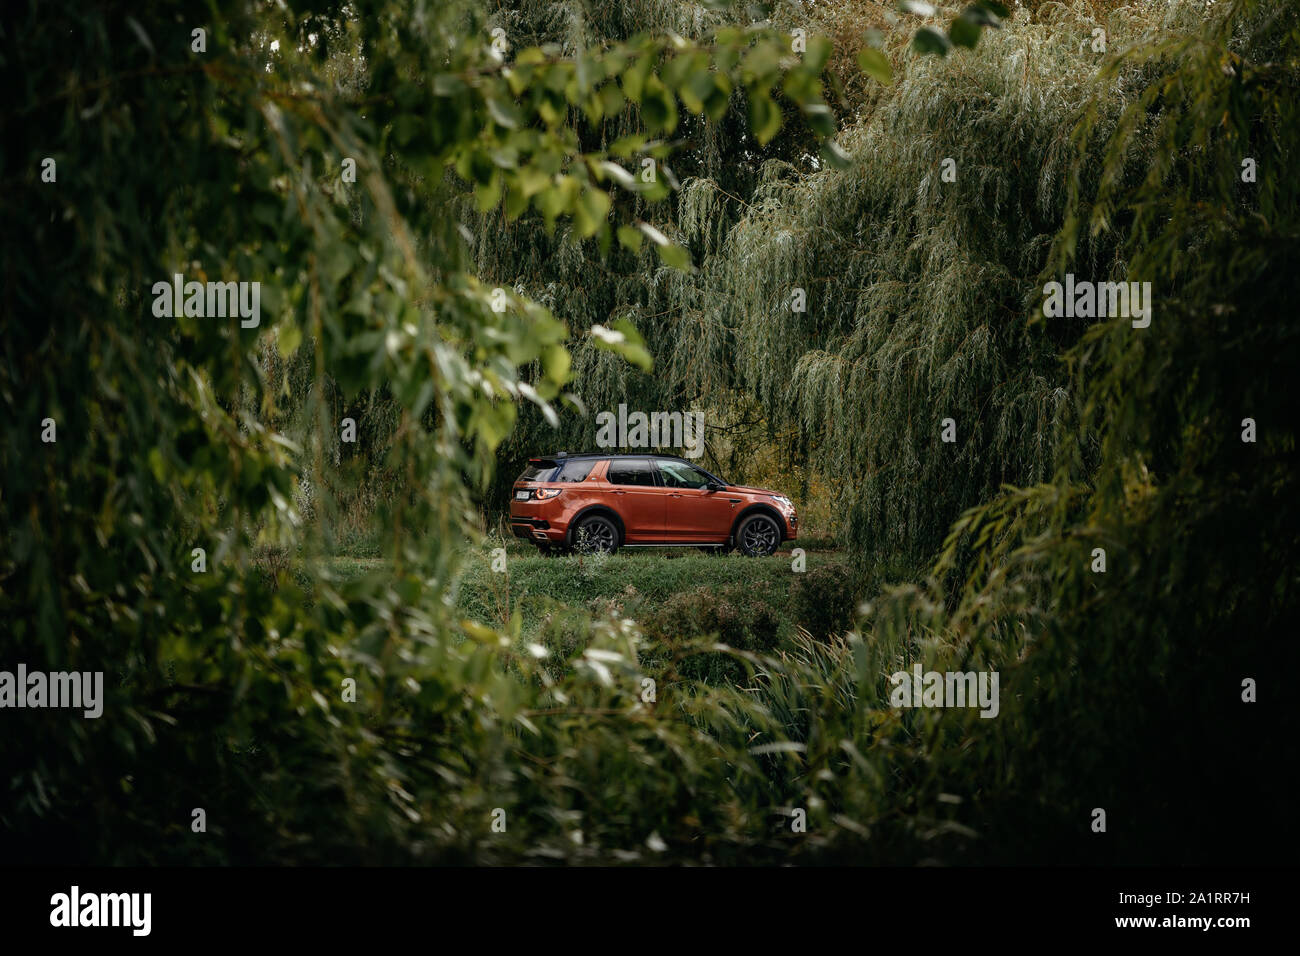 Minsk, Belarus - September 24, 2019: Land Rover Discovery Sport in autumn dense forest forest landscape. Stock Photo